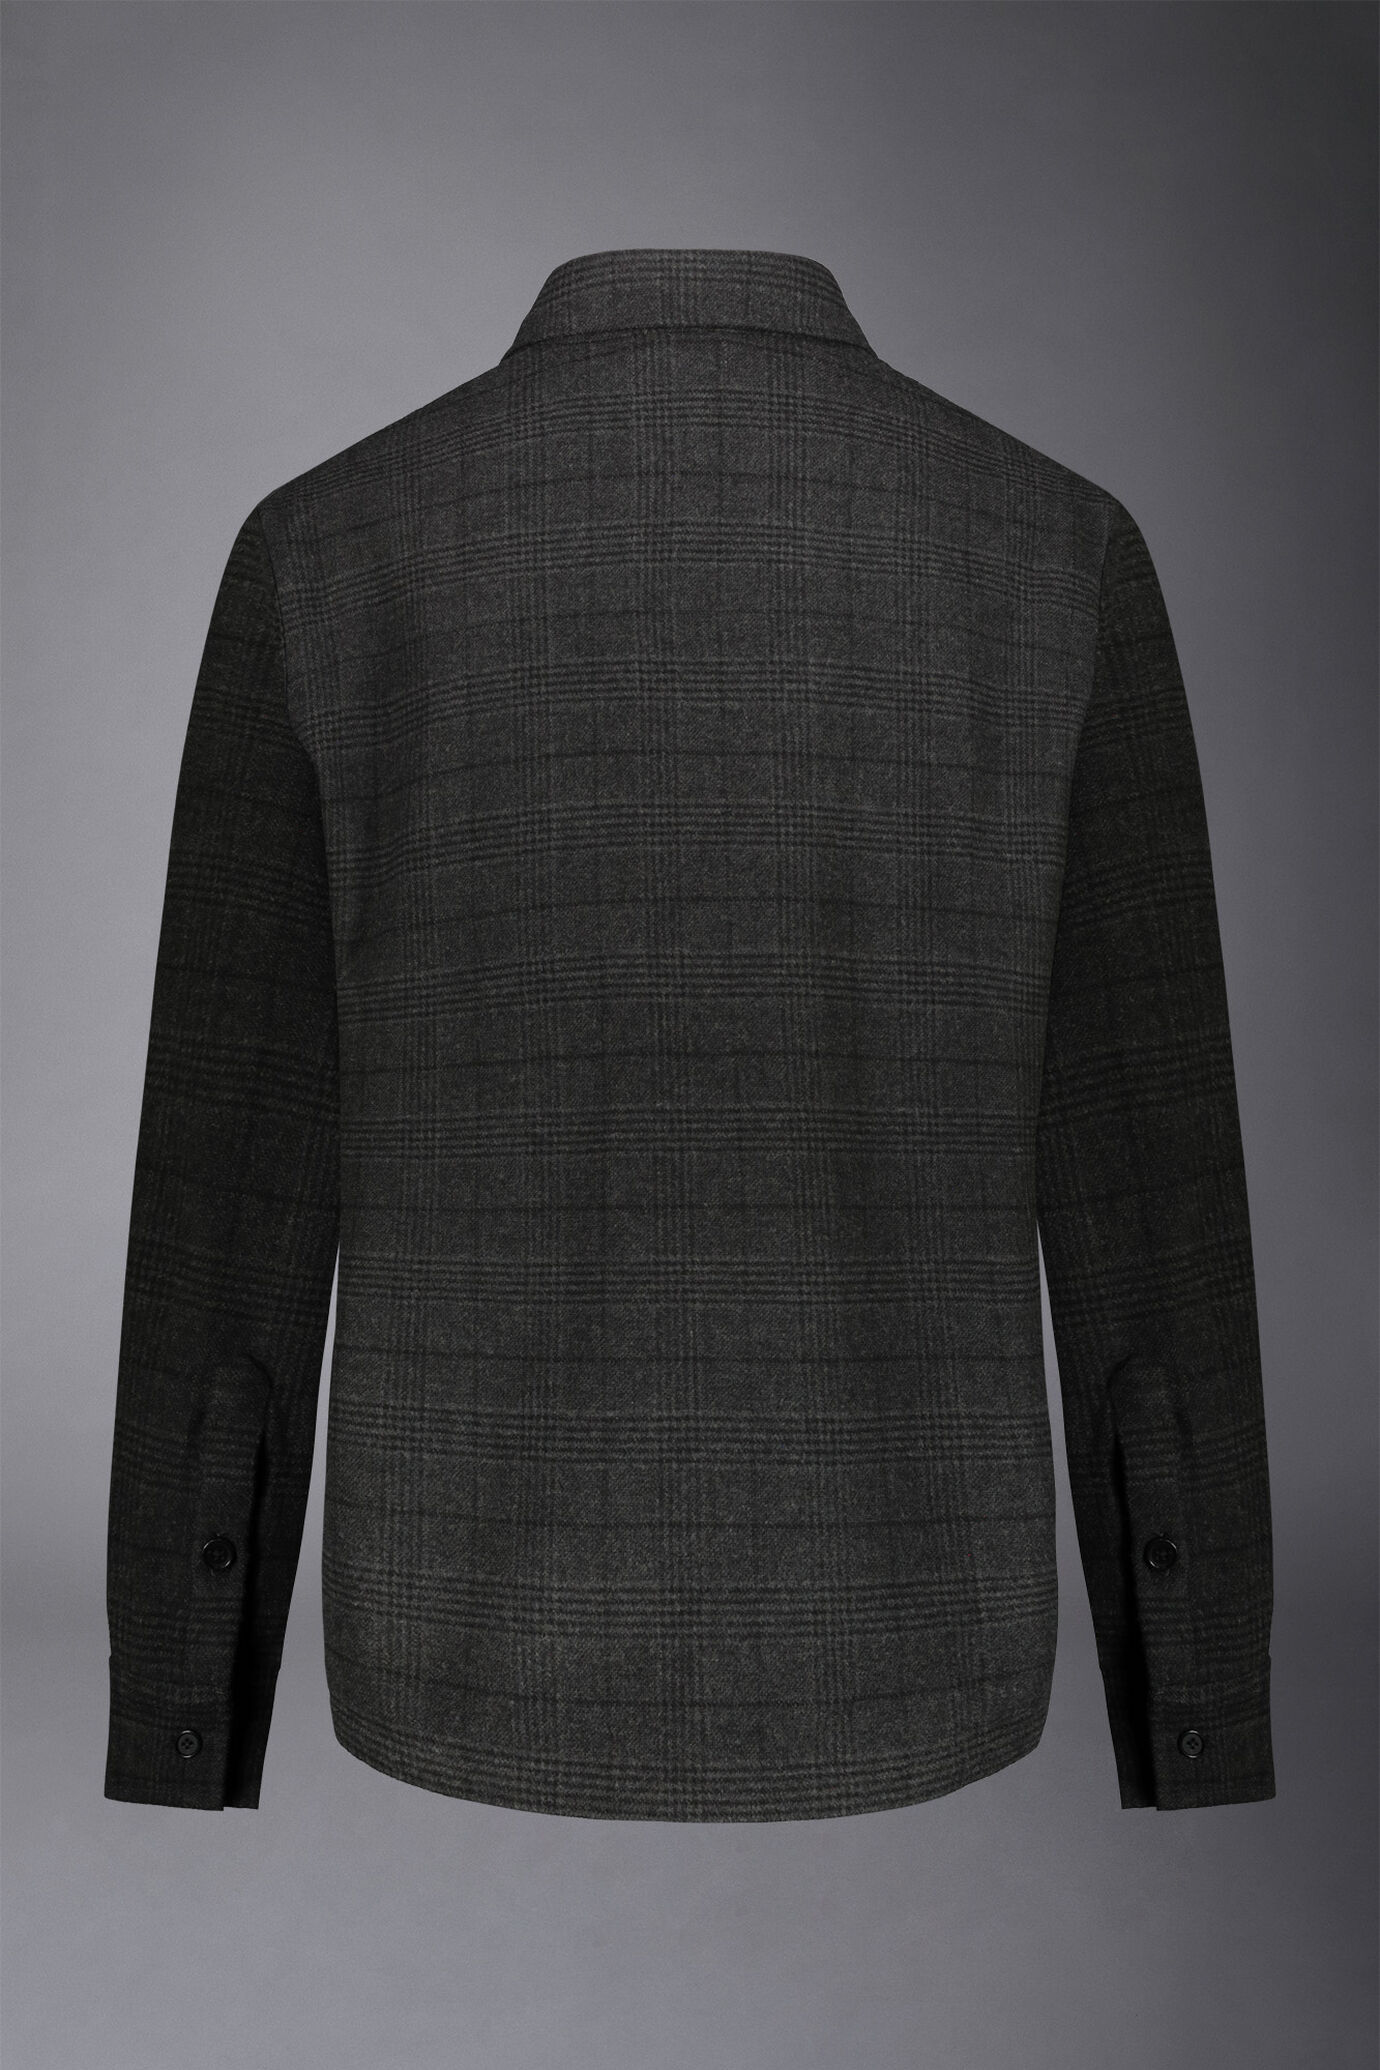 Men's shirt jacket wool blend checked fabric regular fit image number 5